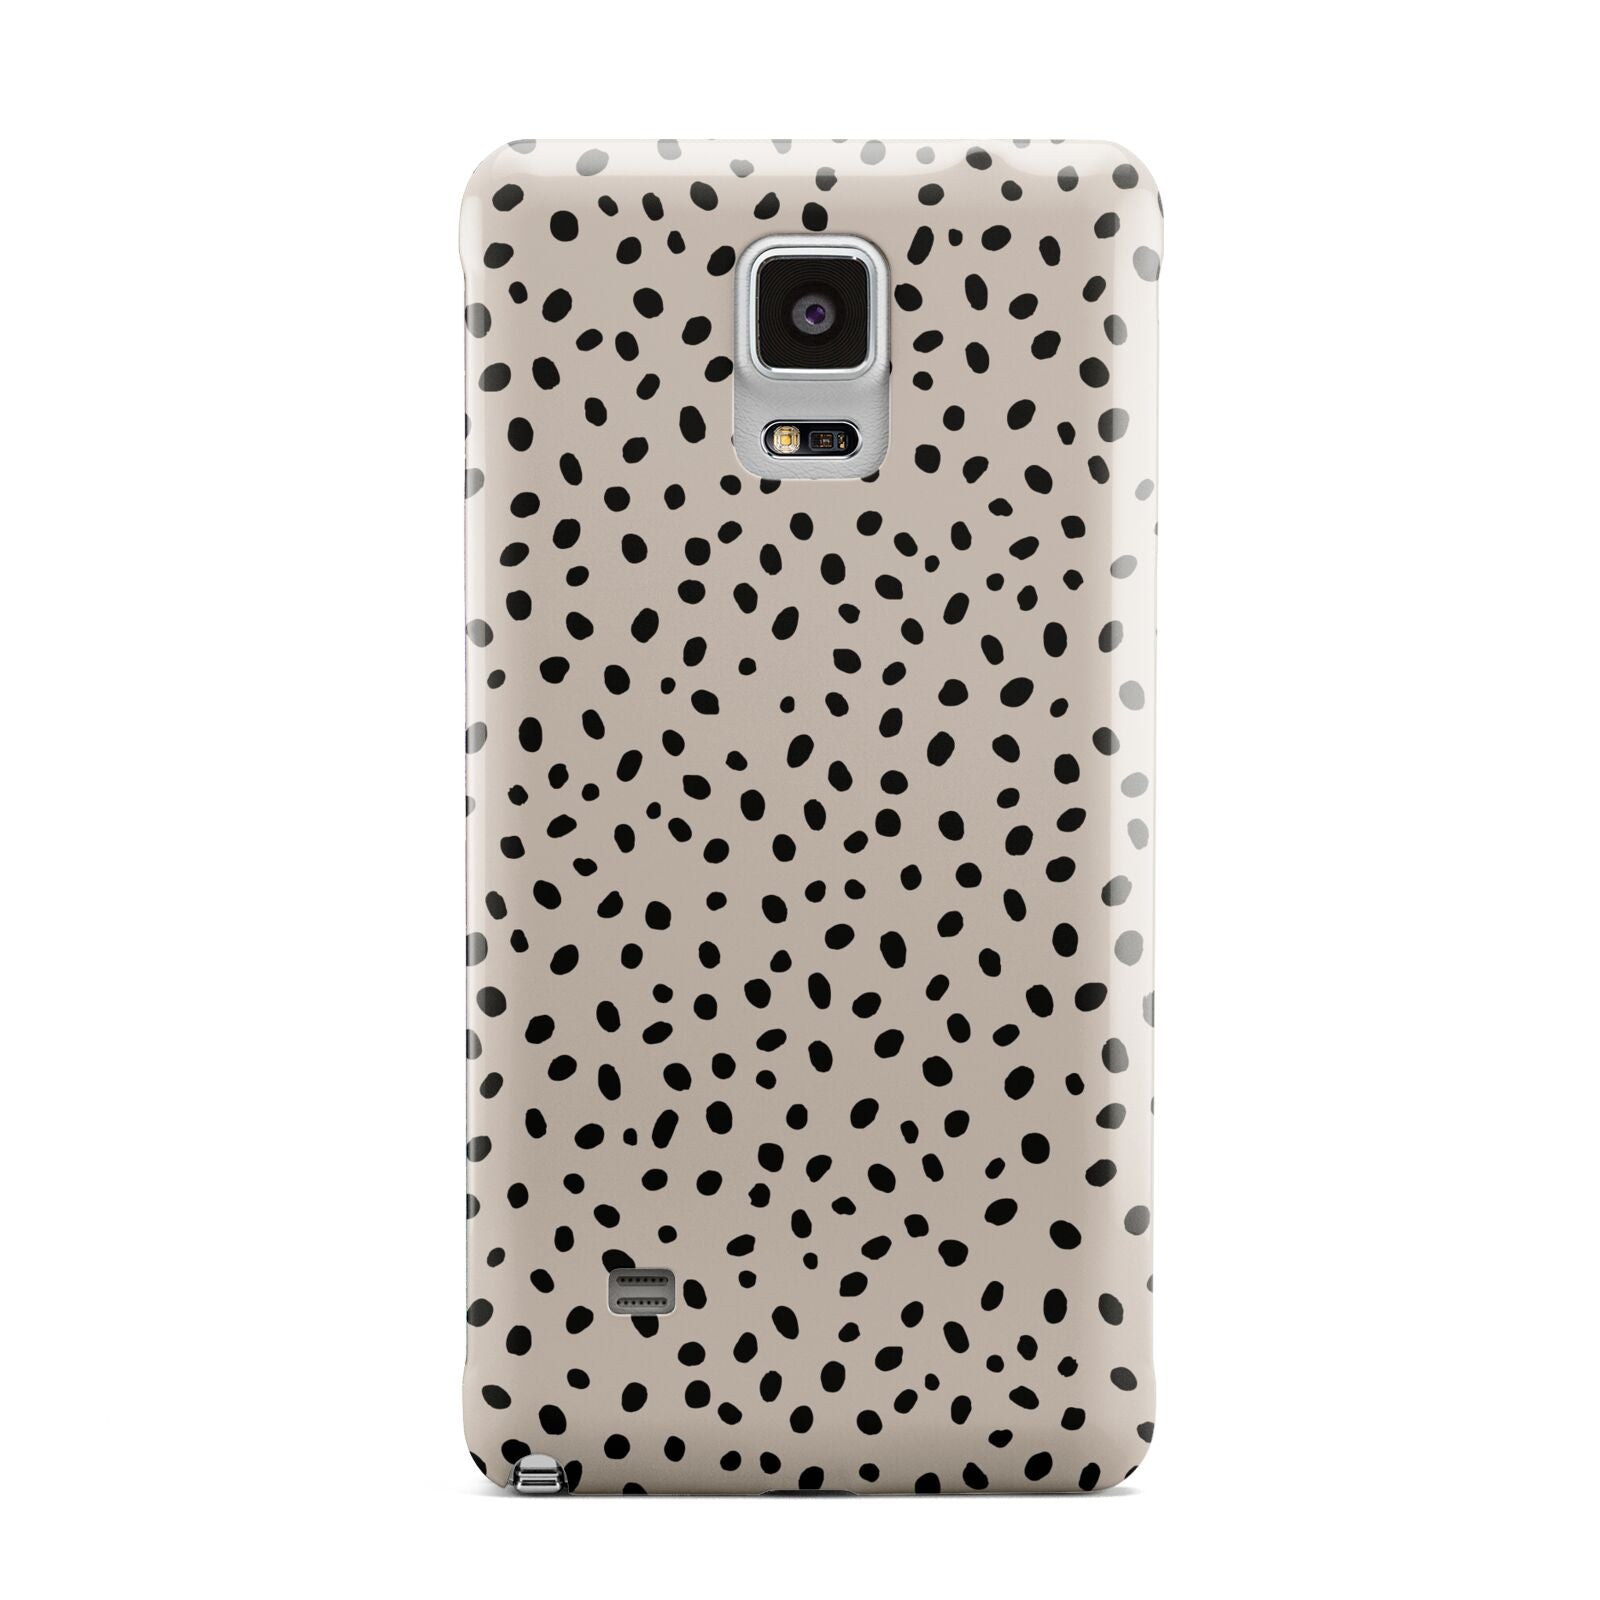 Almond Polka Dot Samsung Galaxy Note 4 Case